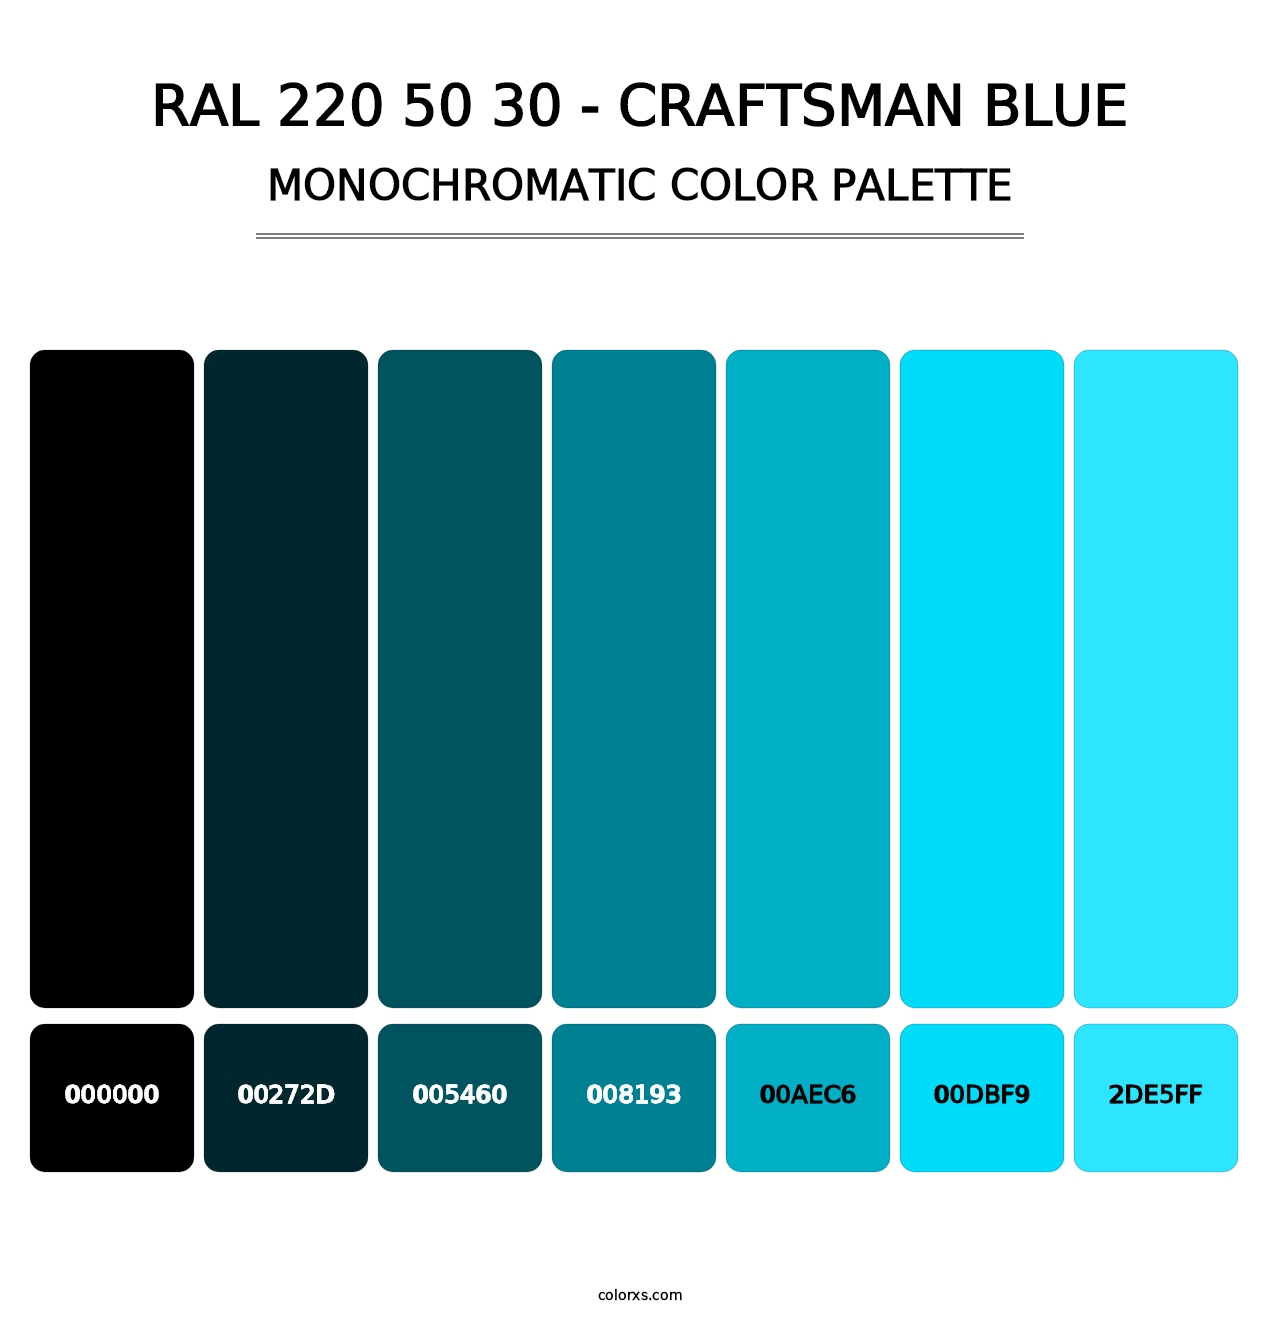 RAL 220 50 30 - Craftsman Blue - Monochromatic Color Palette